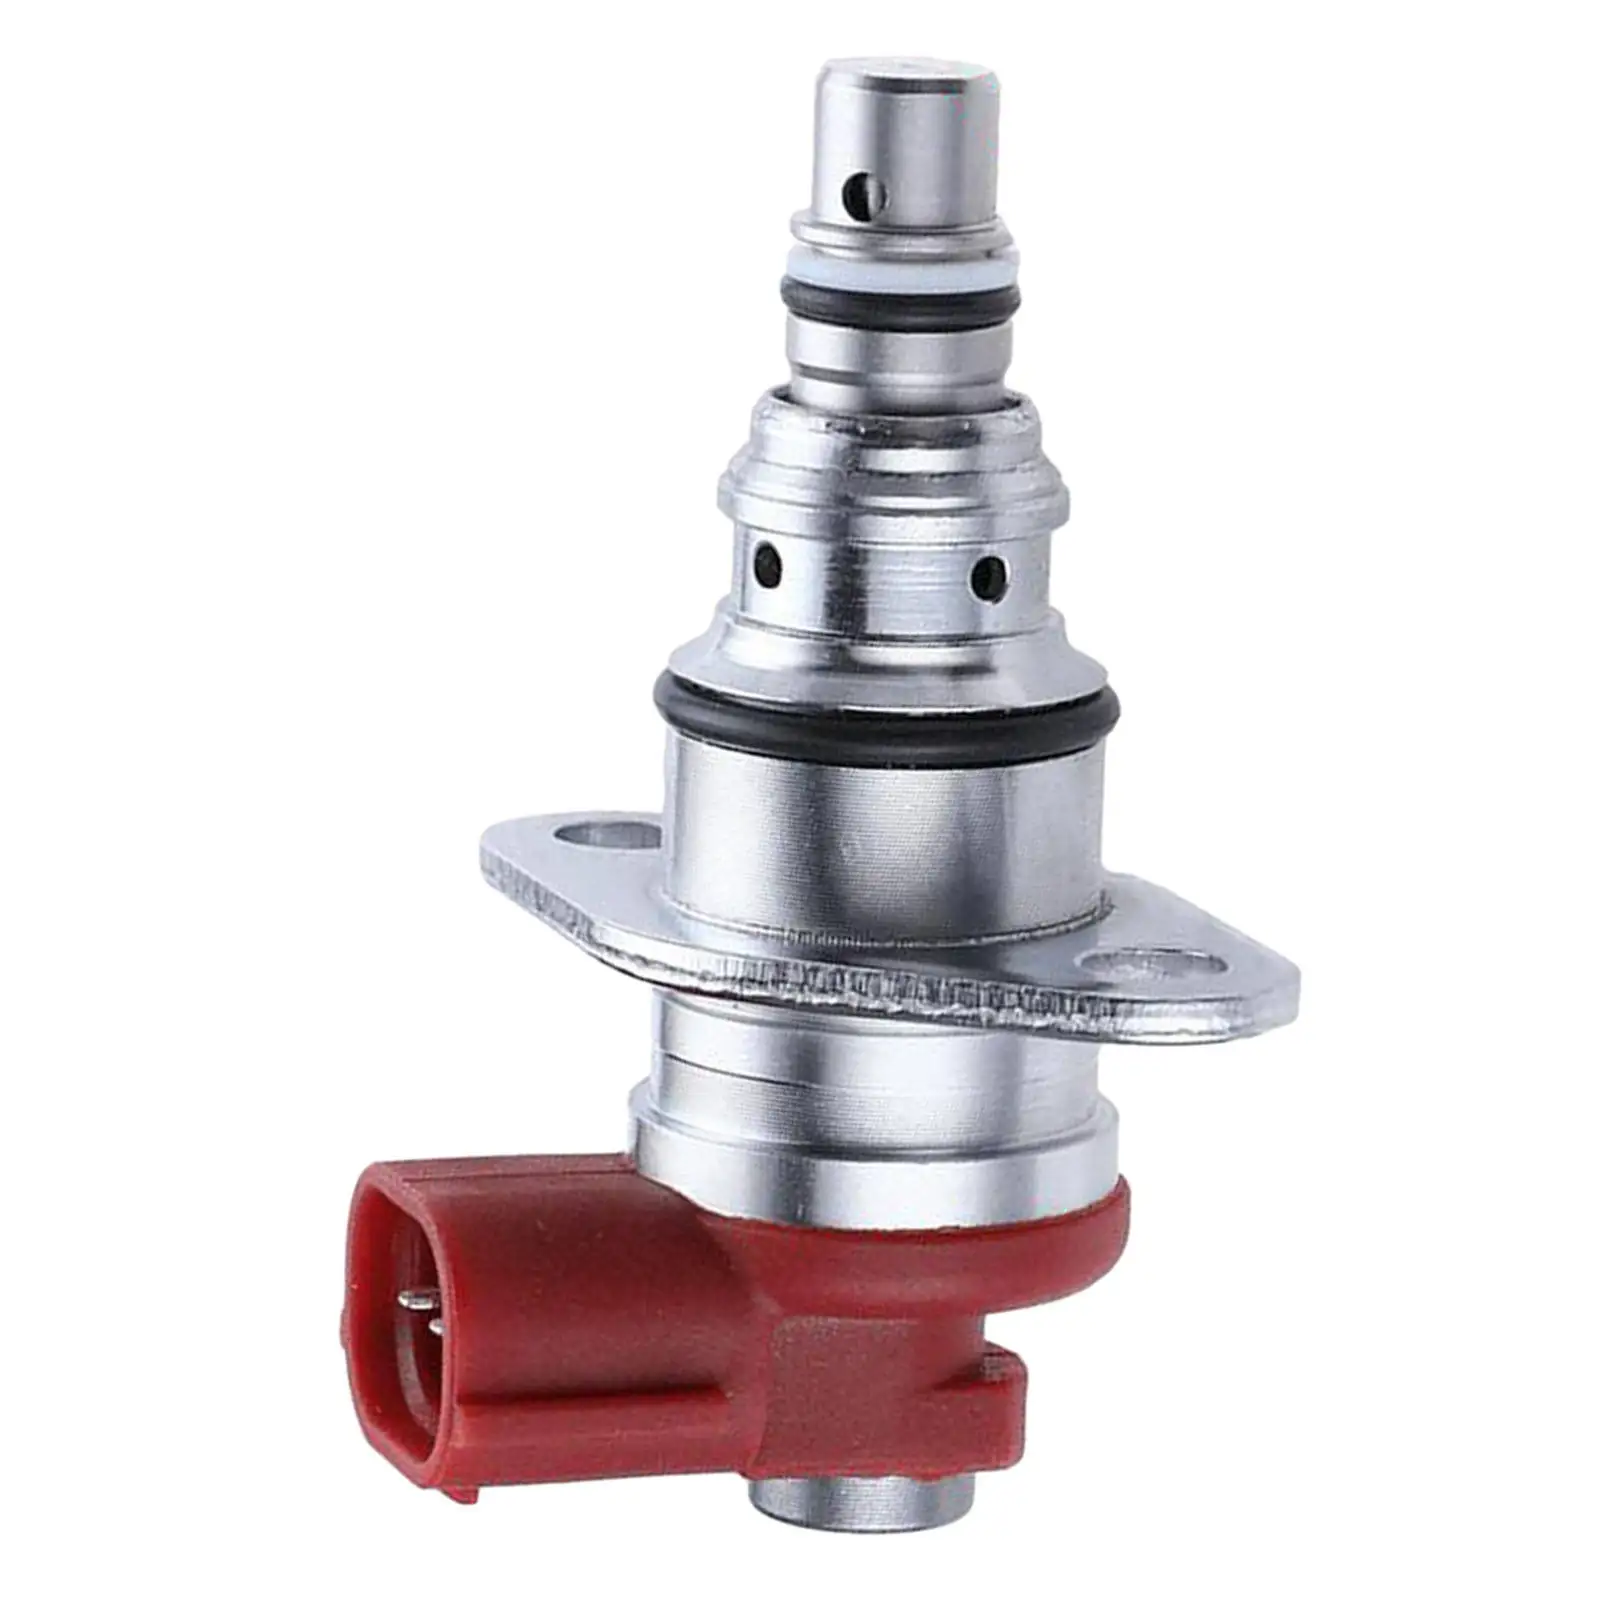 Fuel Suction Control Valve Replace 096710-0120 Accessories Pressure Fuel Pump Regulator Scv for RAV 4 Corolla Hiace